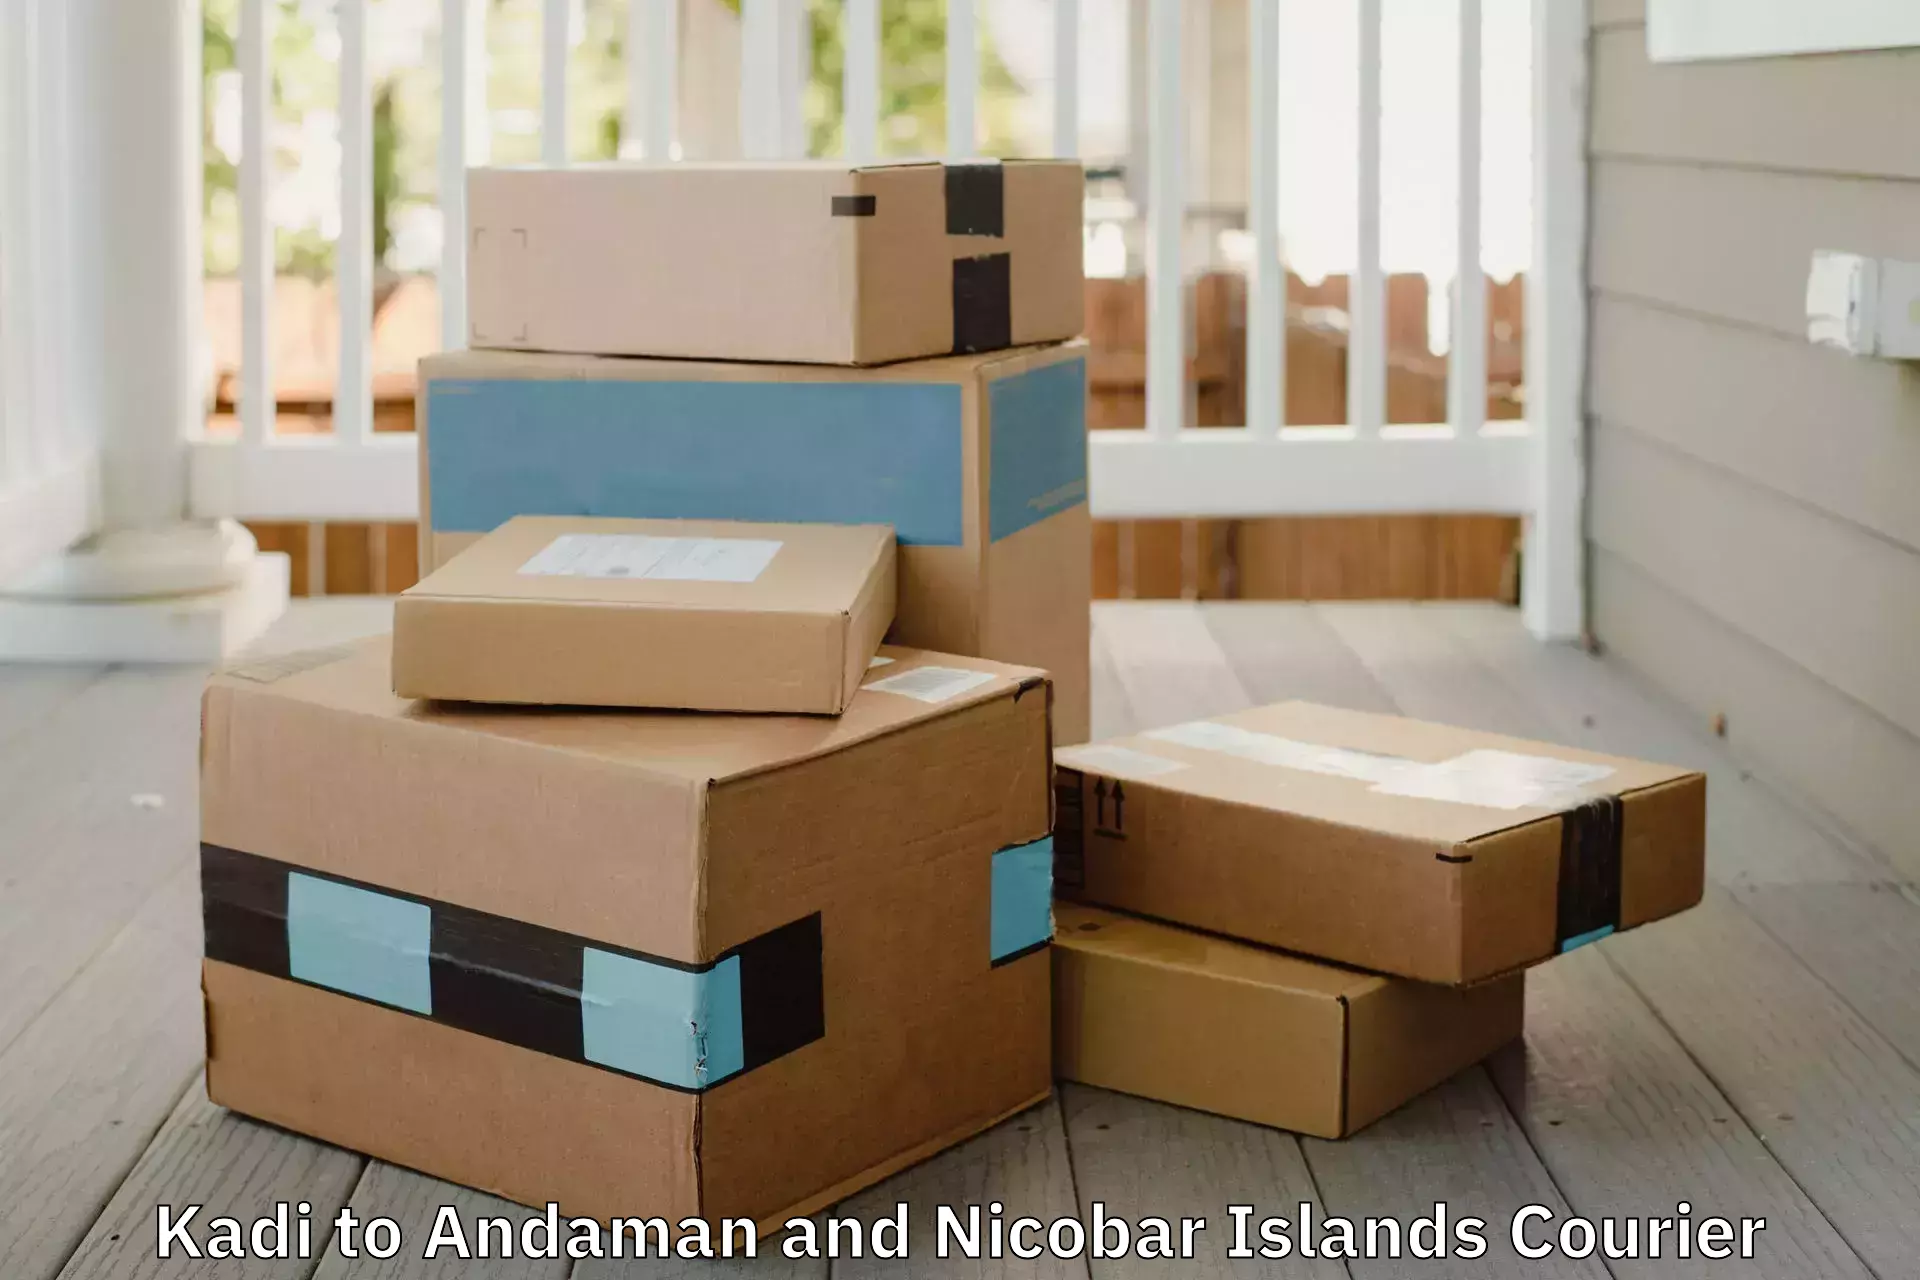 Furniture delivery service Kadi to Andaman and Nicobar Islands